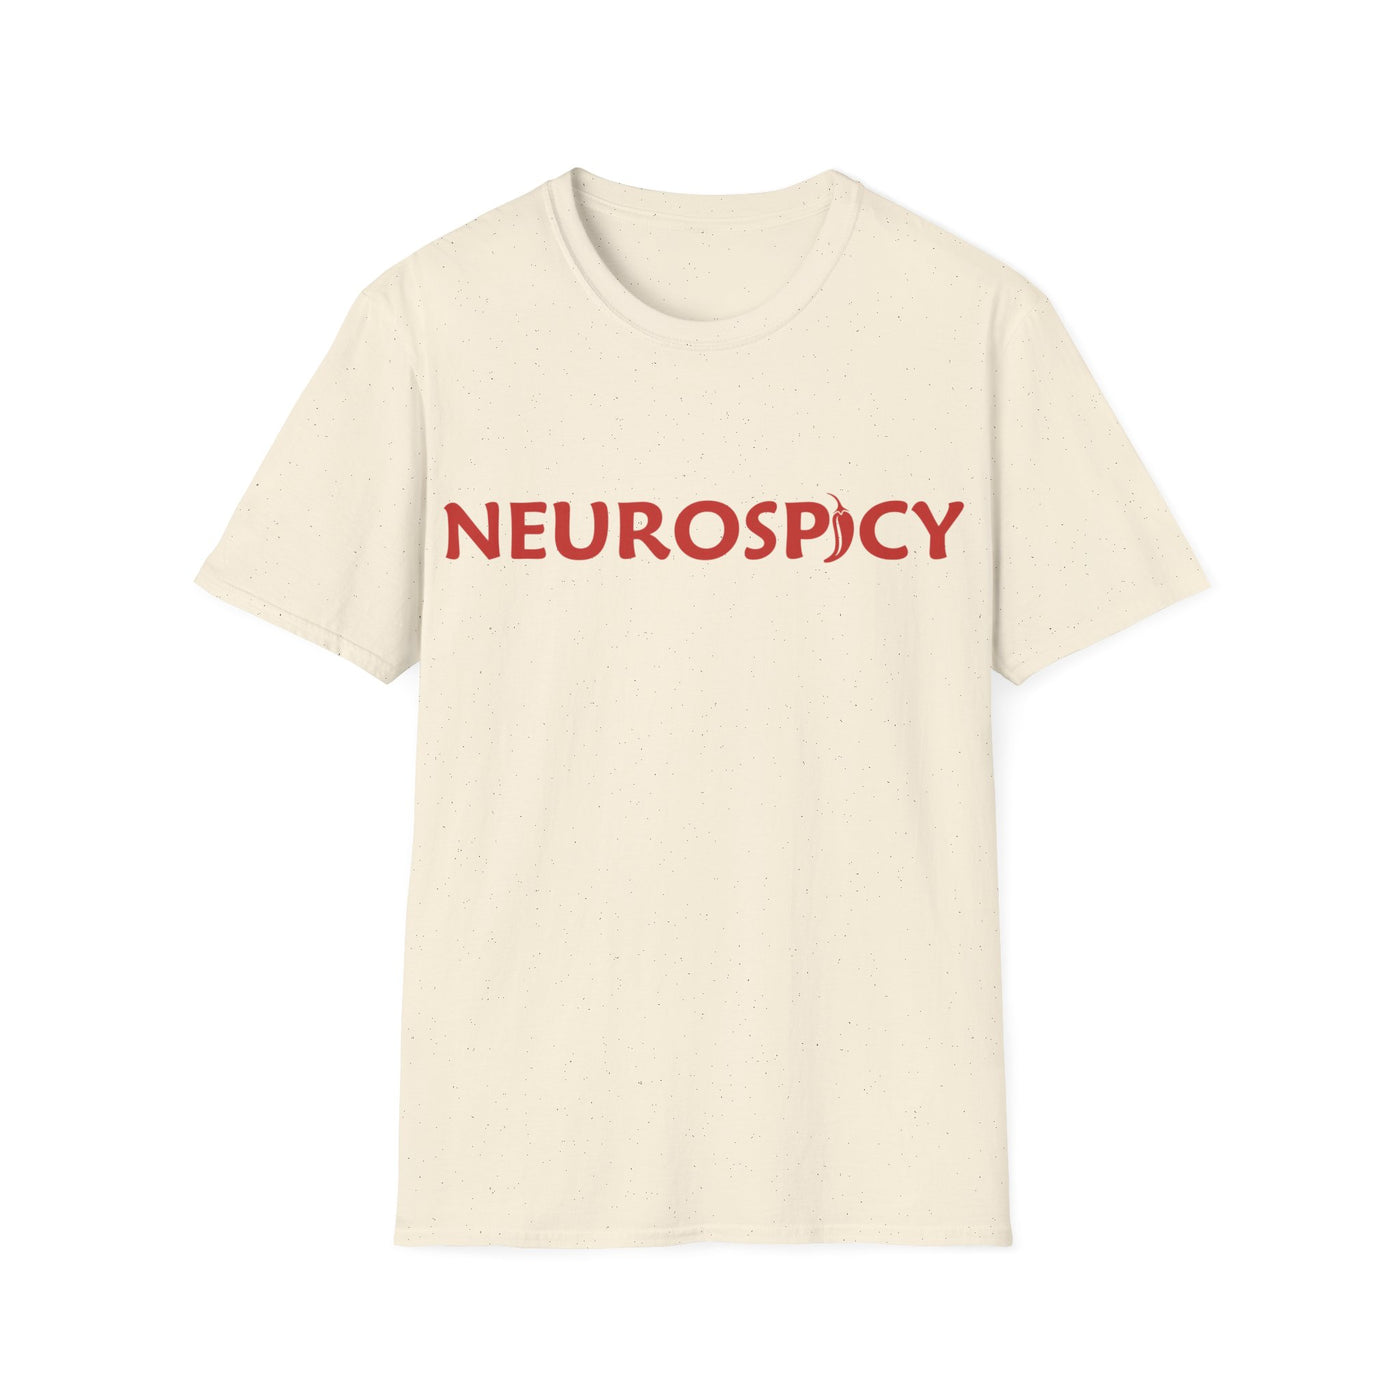 Neurospicy